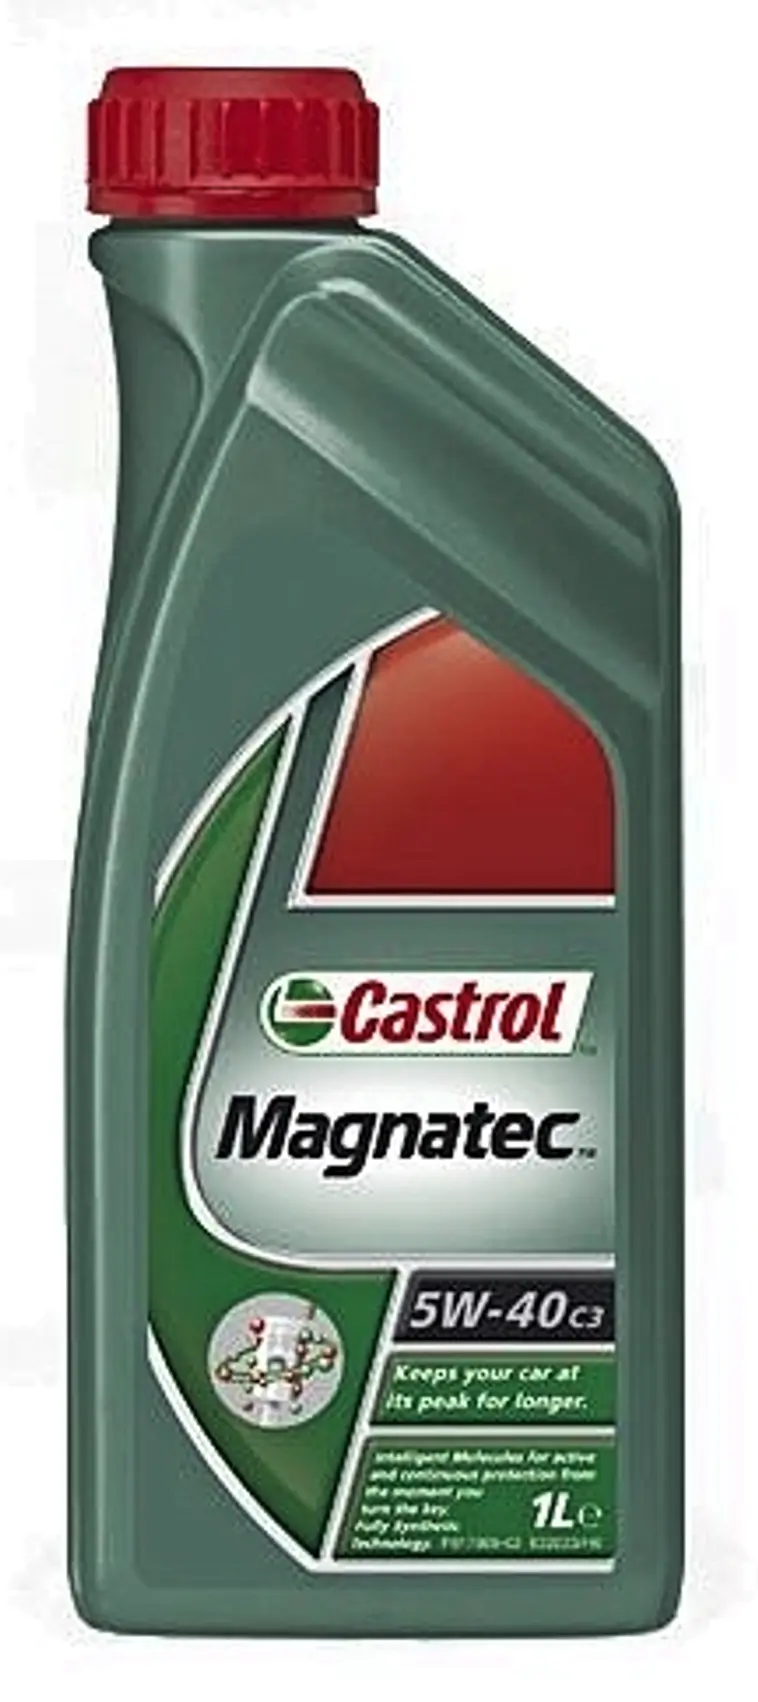 Castrol Magnatec 5W-40 moottoriöljy 1l